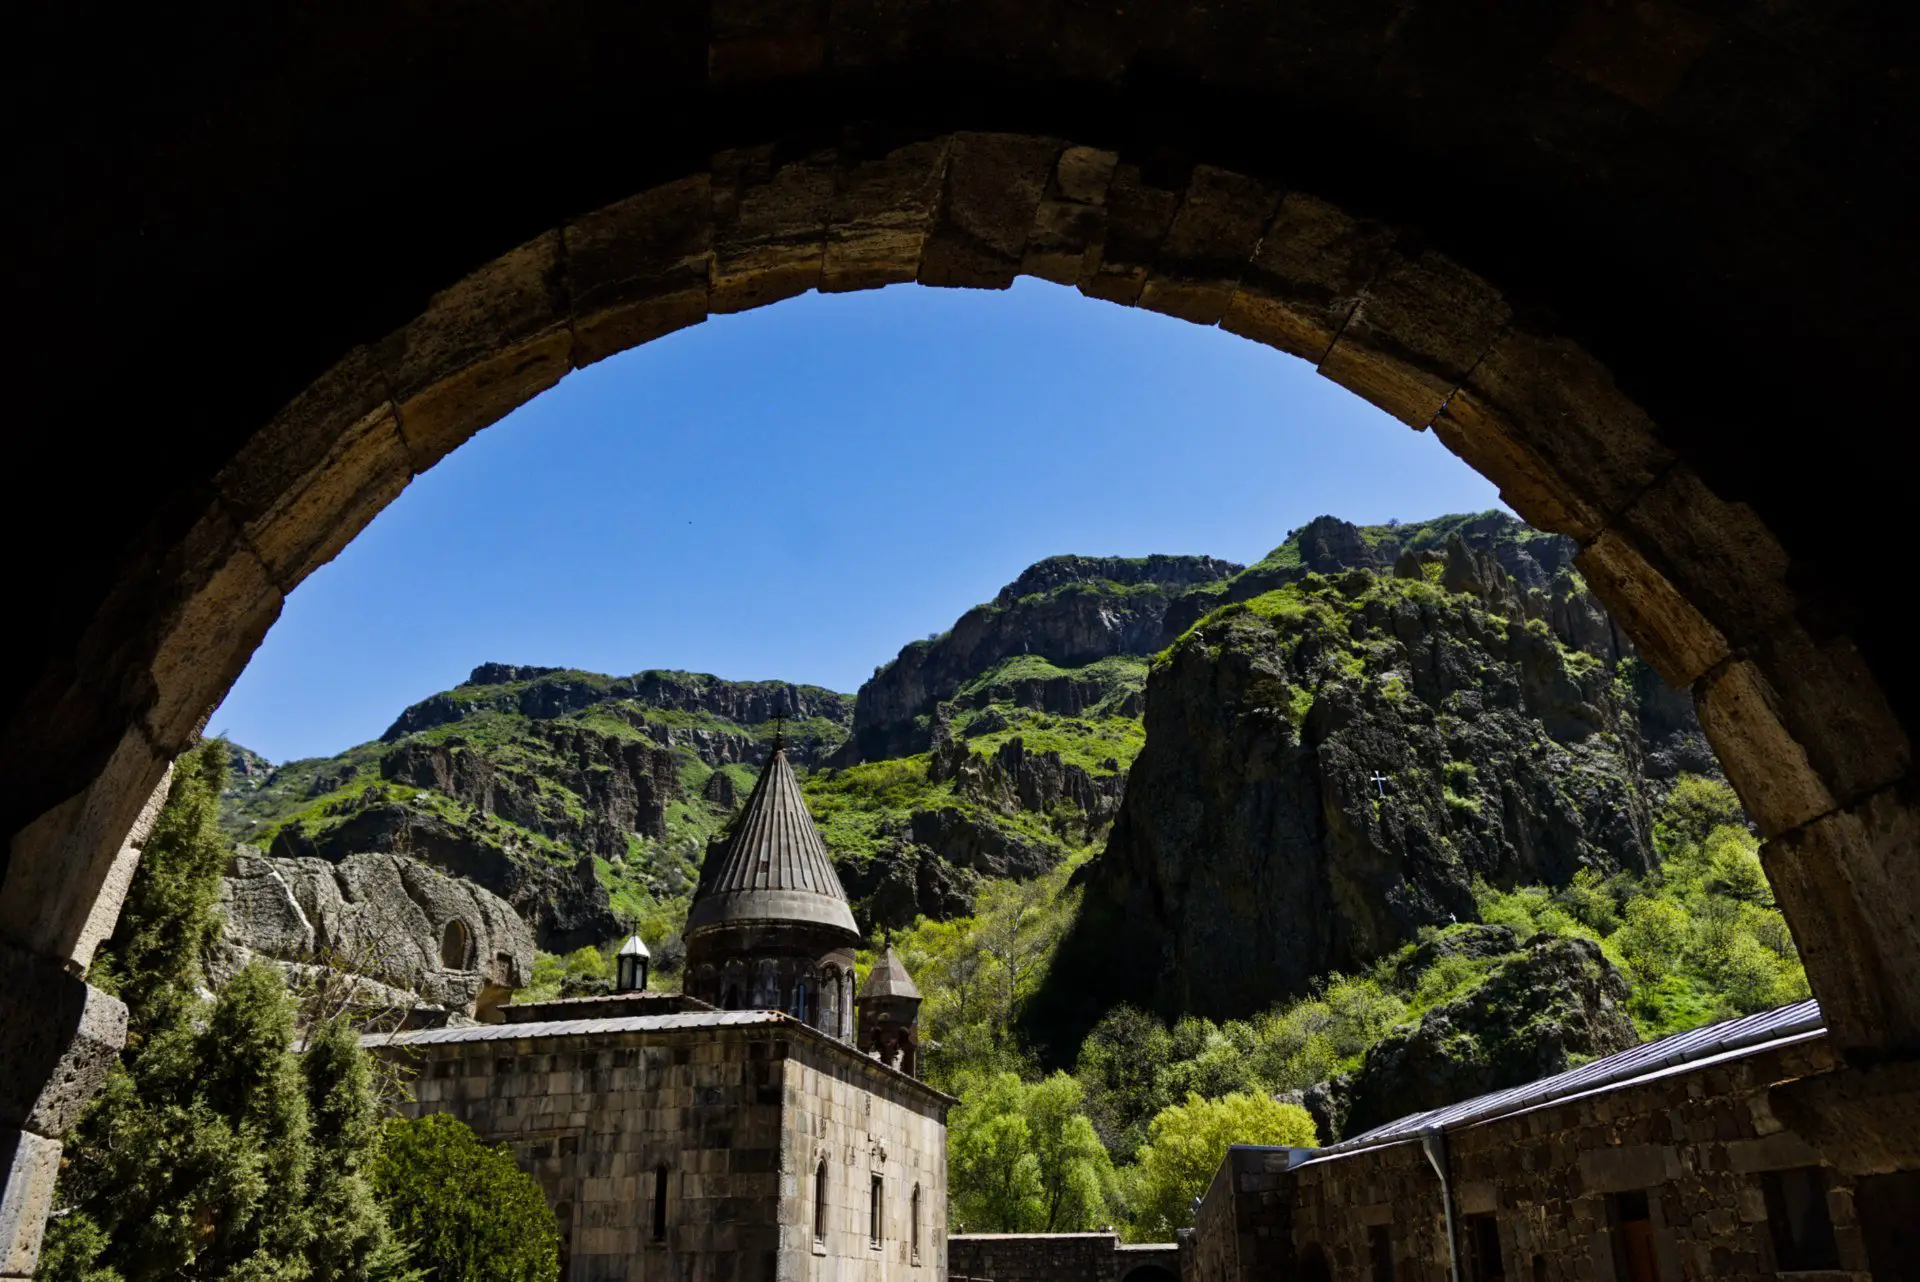 Geghard monastery, Armenia – Experiencing the Globe